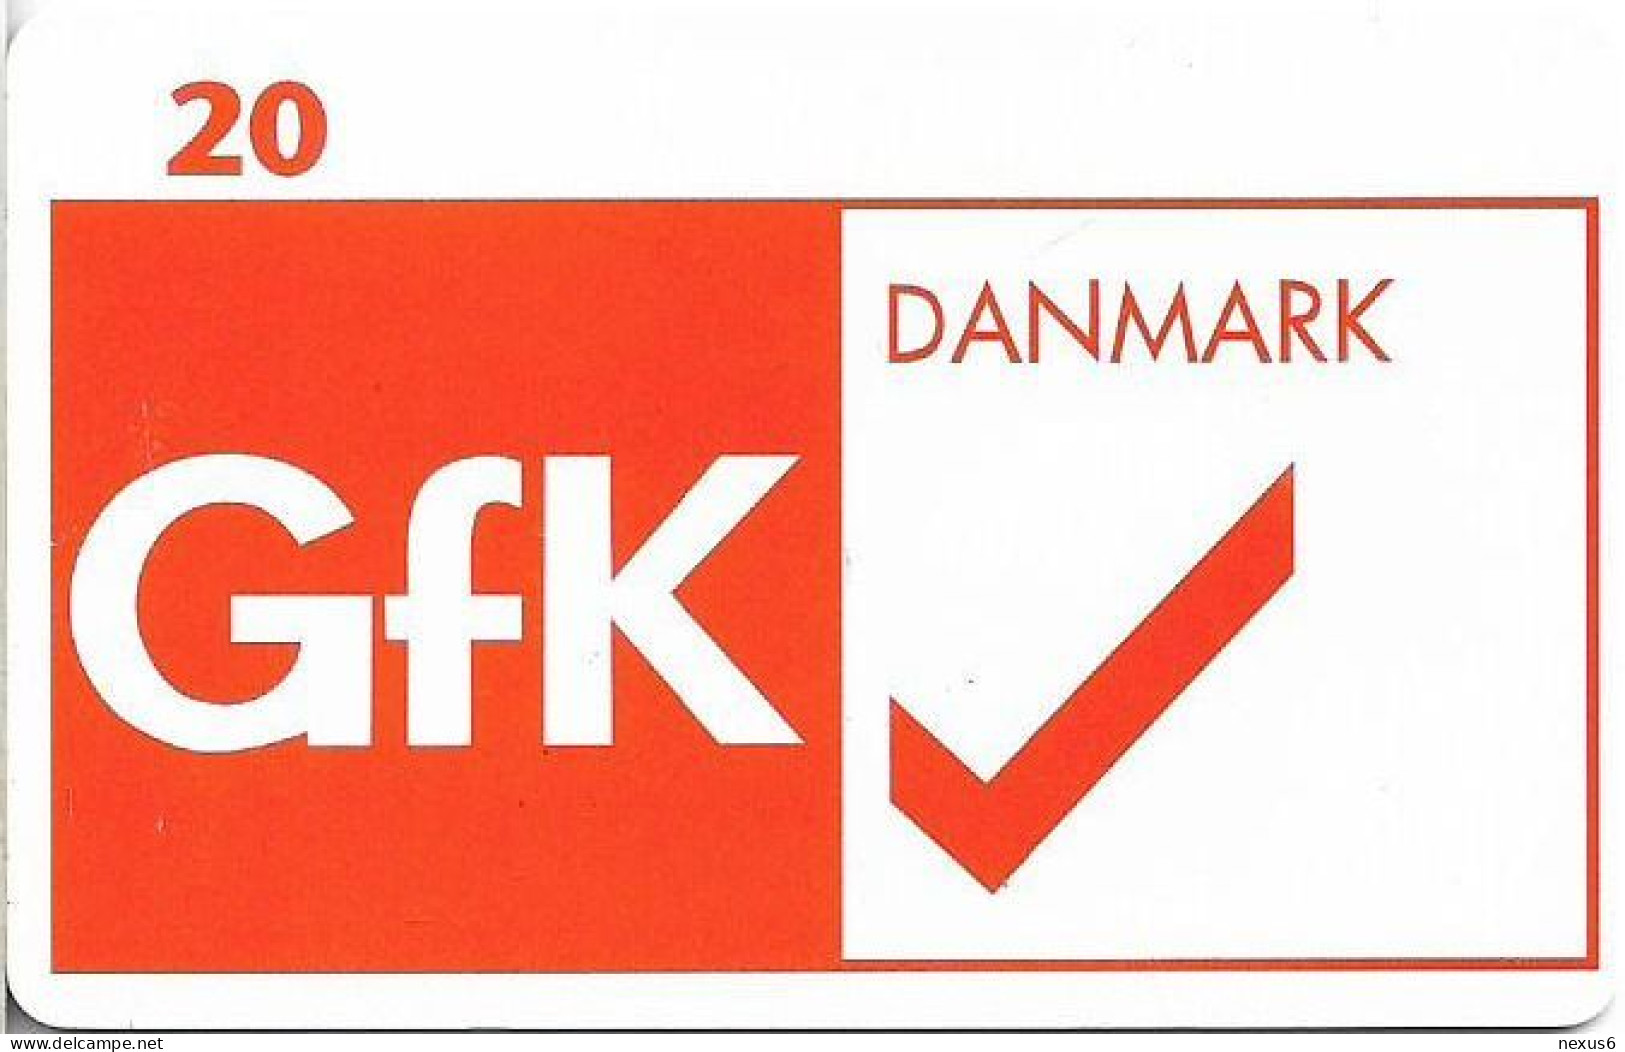 Denmark - Tele Danmark (chip) - GFK Danmark AS - TDP213B - 07.1998, 1.100ex, 20kr, Used - Danemark